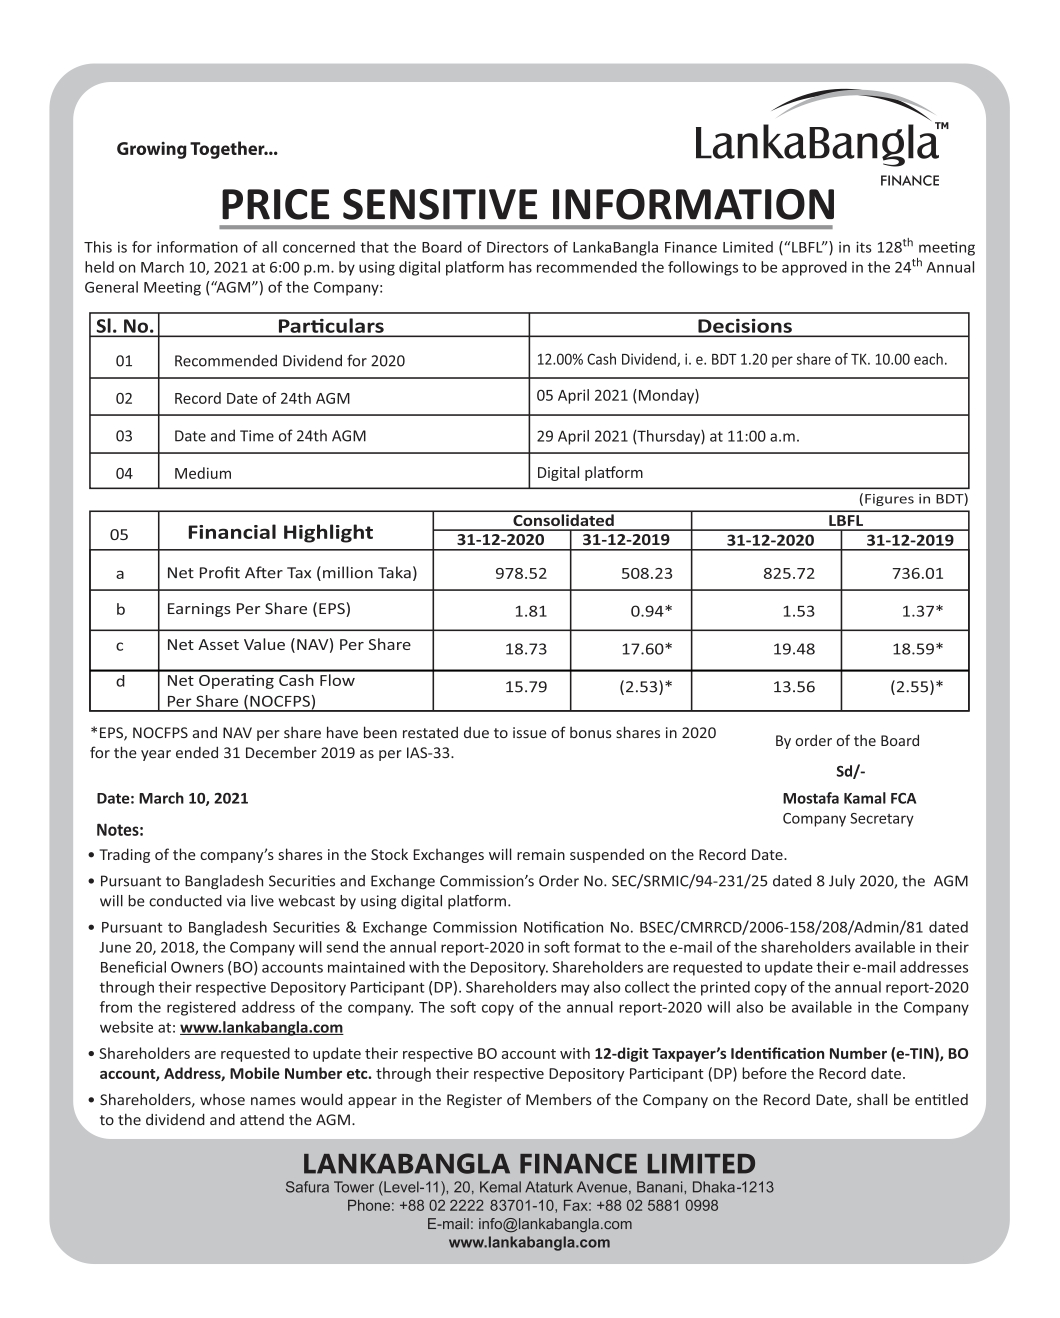 Price Sensitive Information